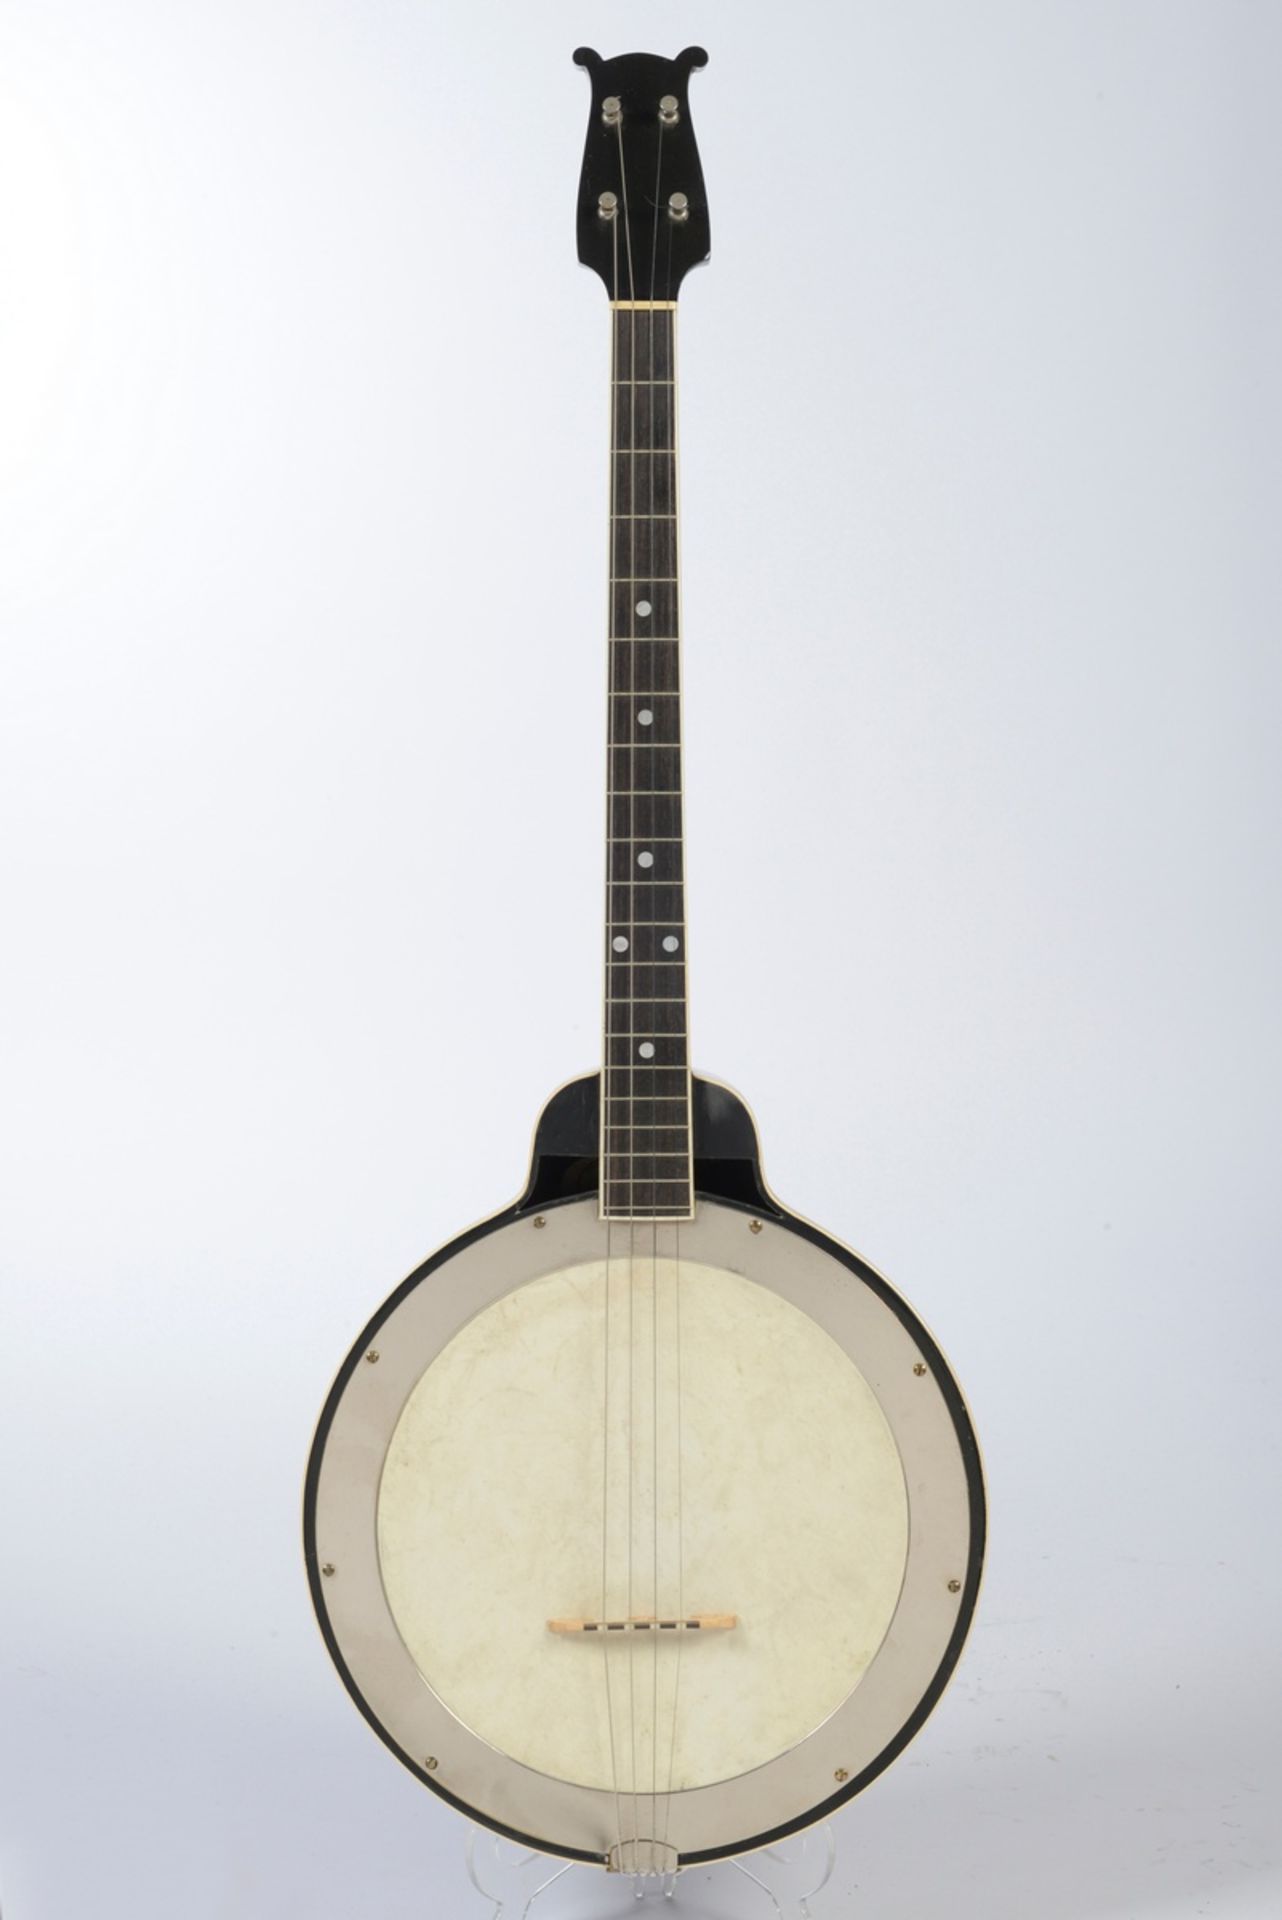 Tenor Banjo, A.J. Reger/Philadelphia Pennsylvania, direkte Stimmwirbel, 20 Bünde, Lyra-Kopf, zentra - Bild 2 aus 15